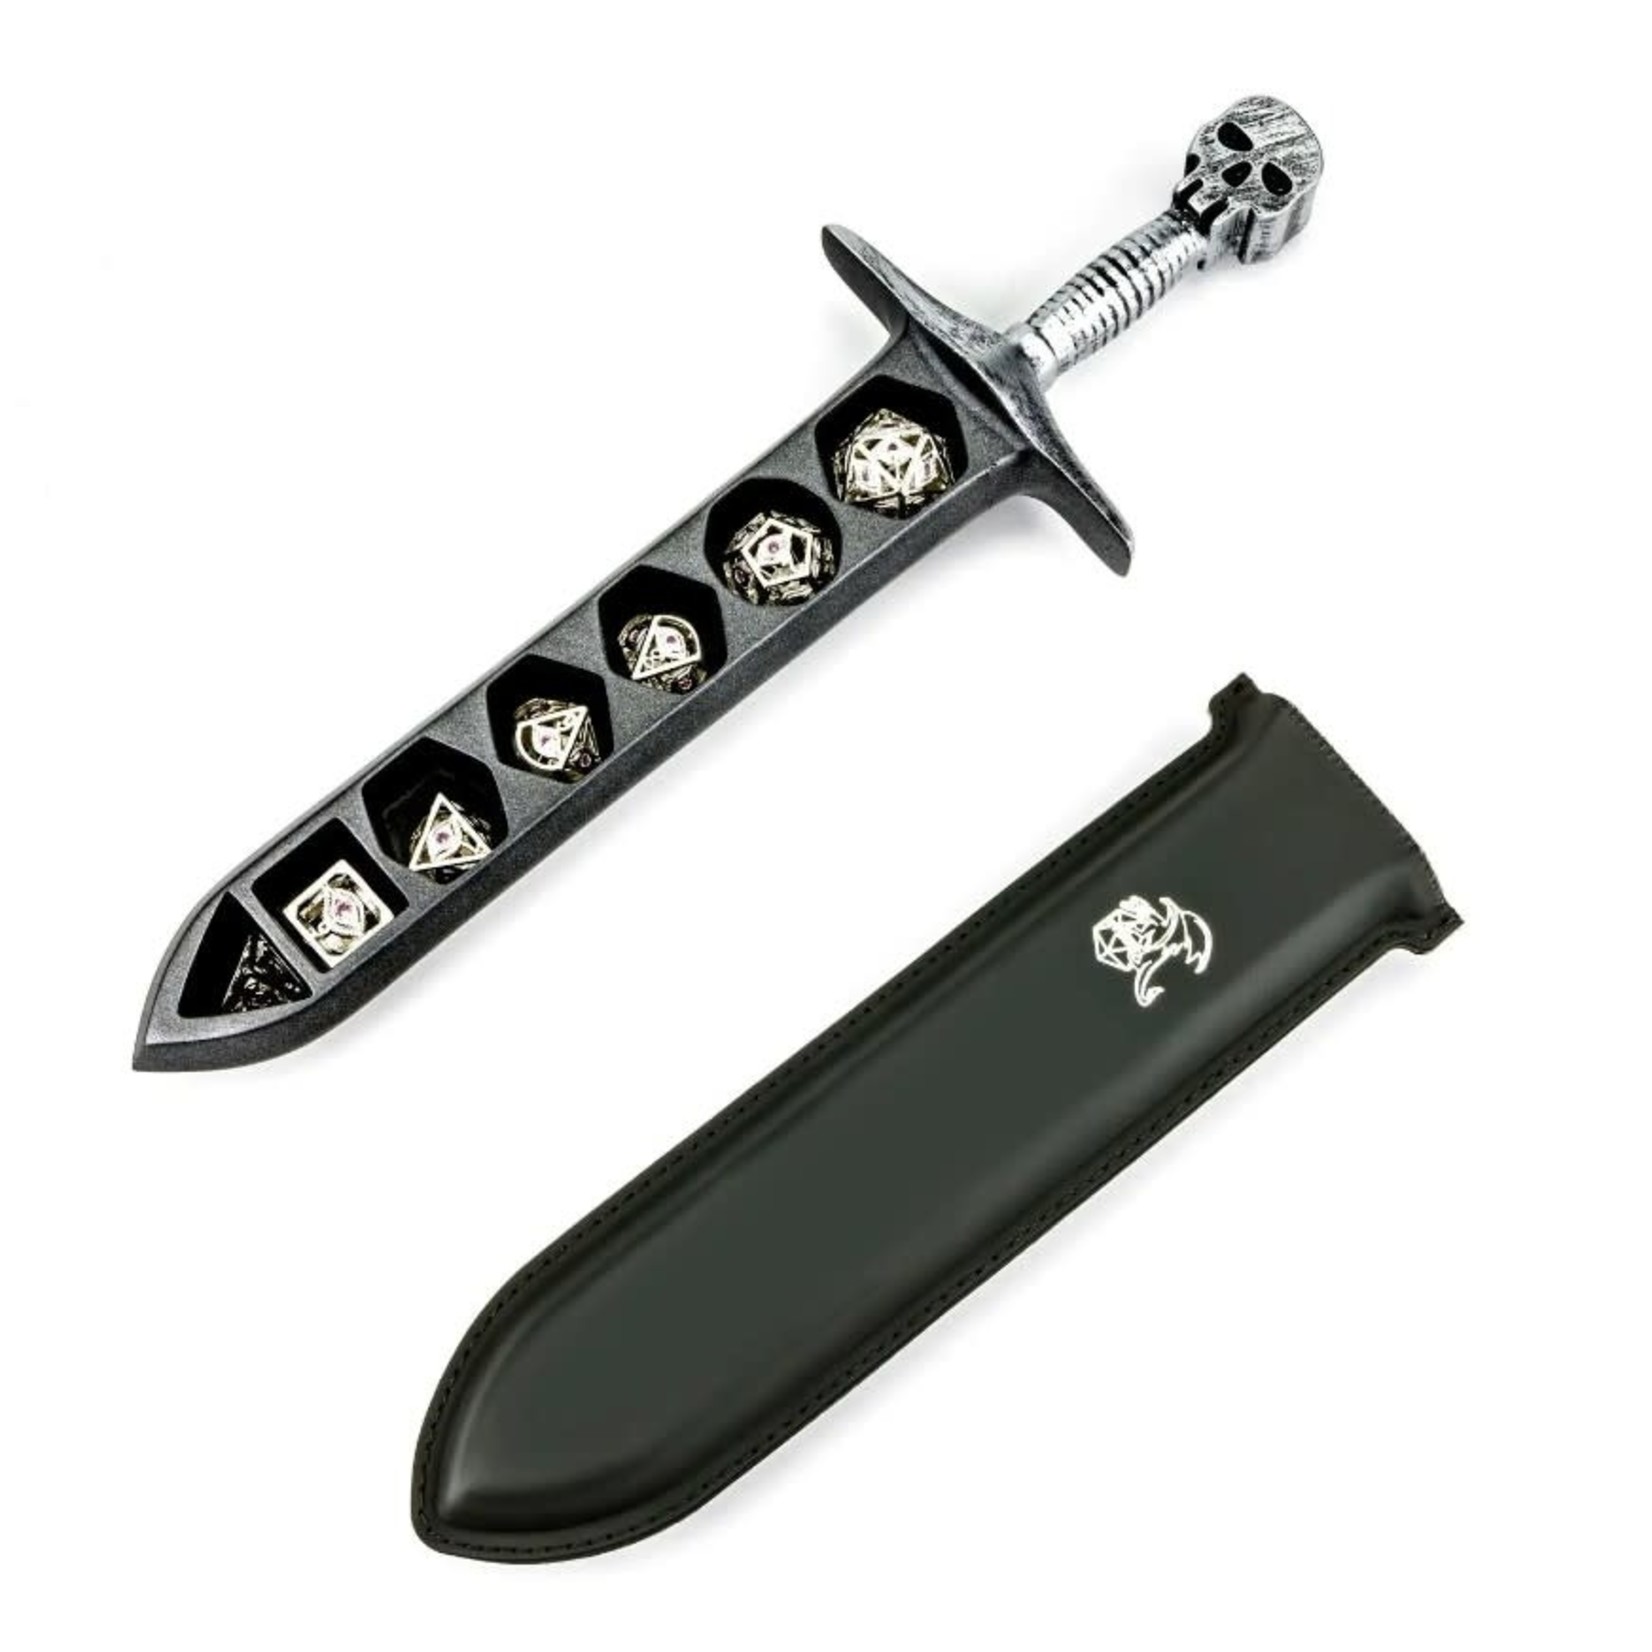 Hymgho Premium Dice Grim Dagger Dice Case with Sheath Cover: Silver